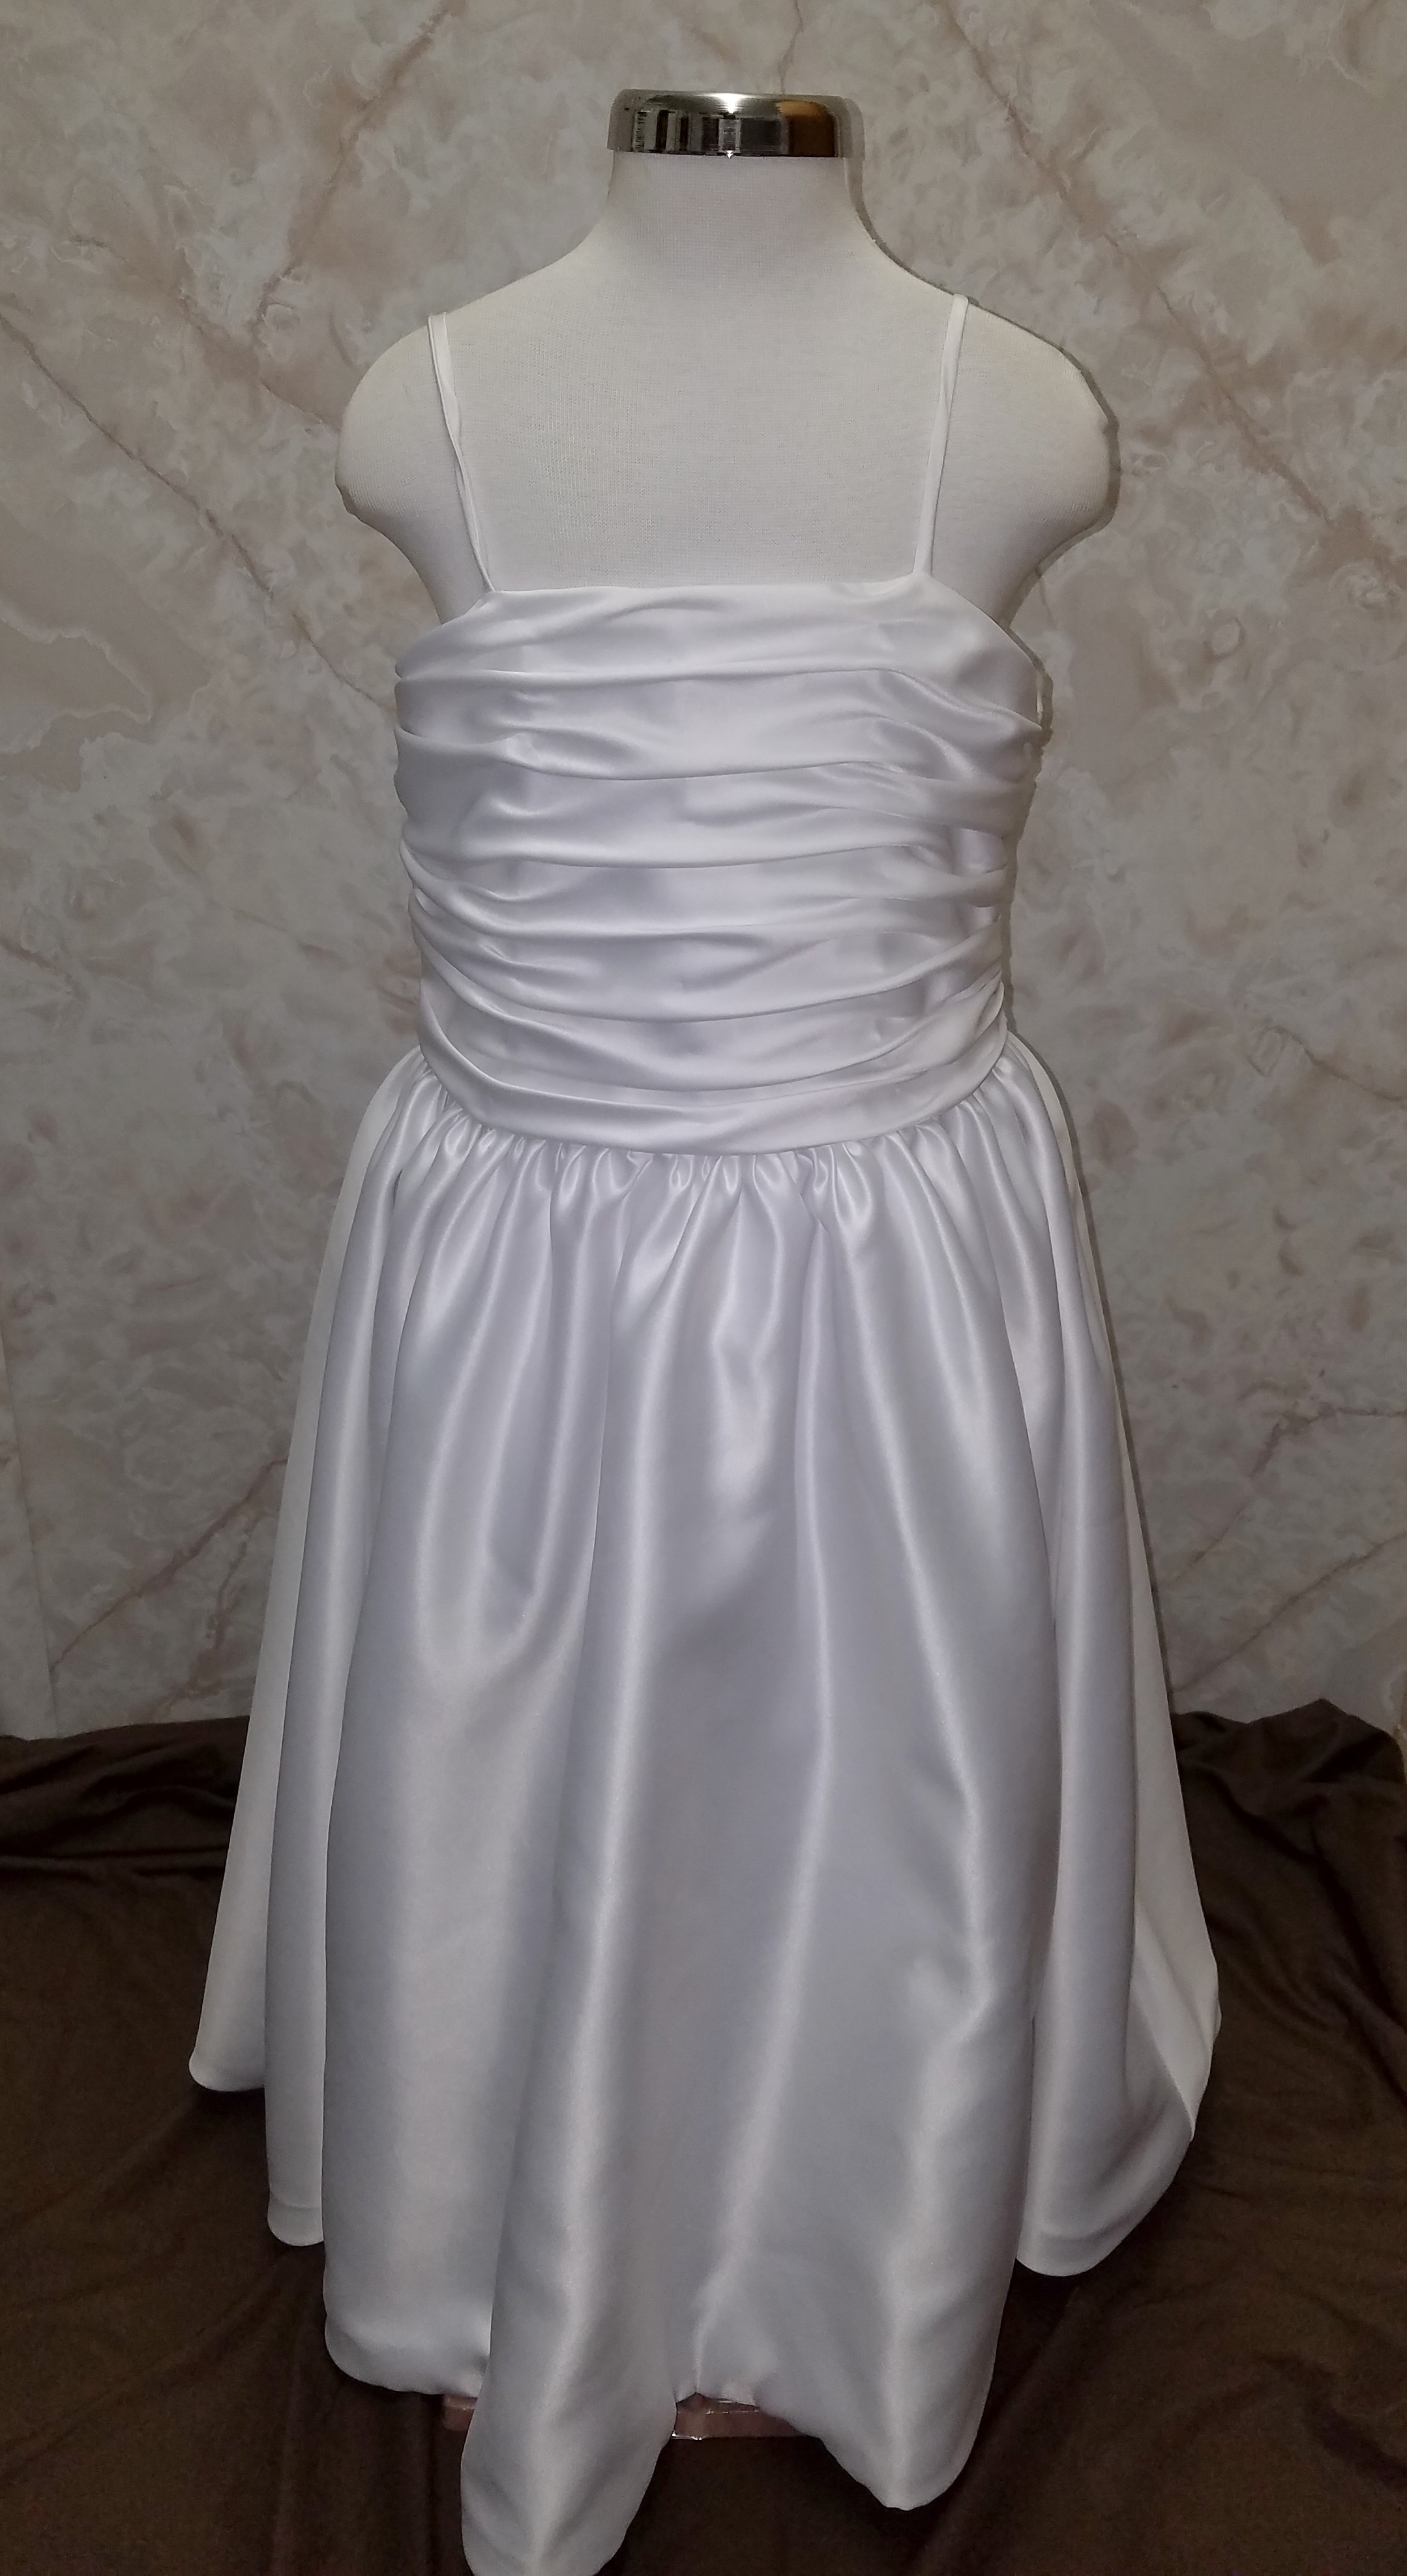 satin white dress size 5